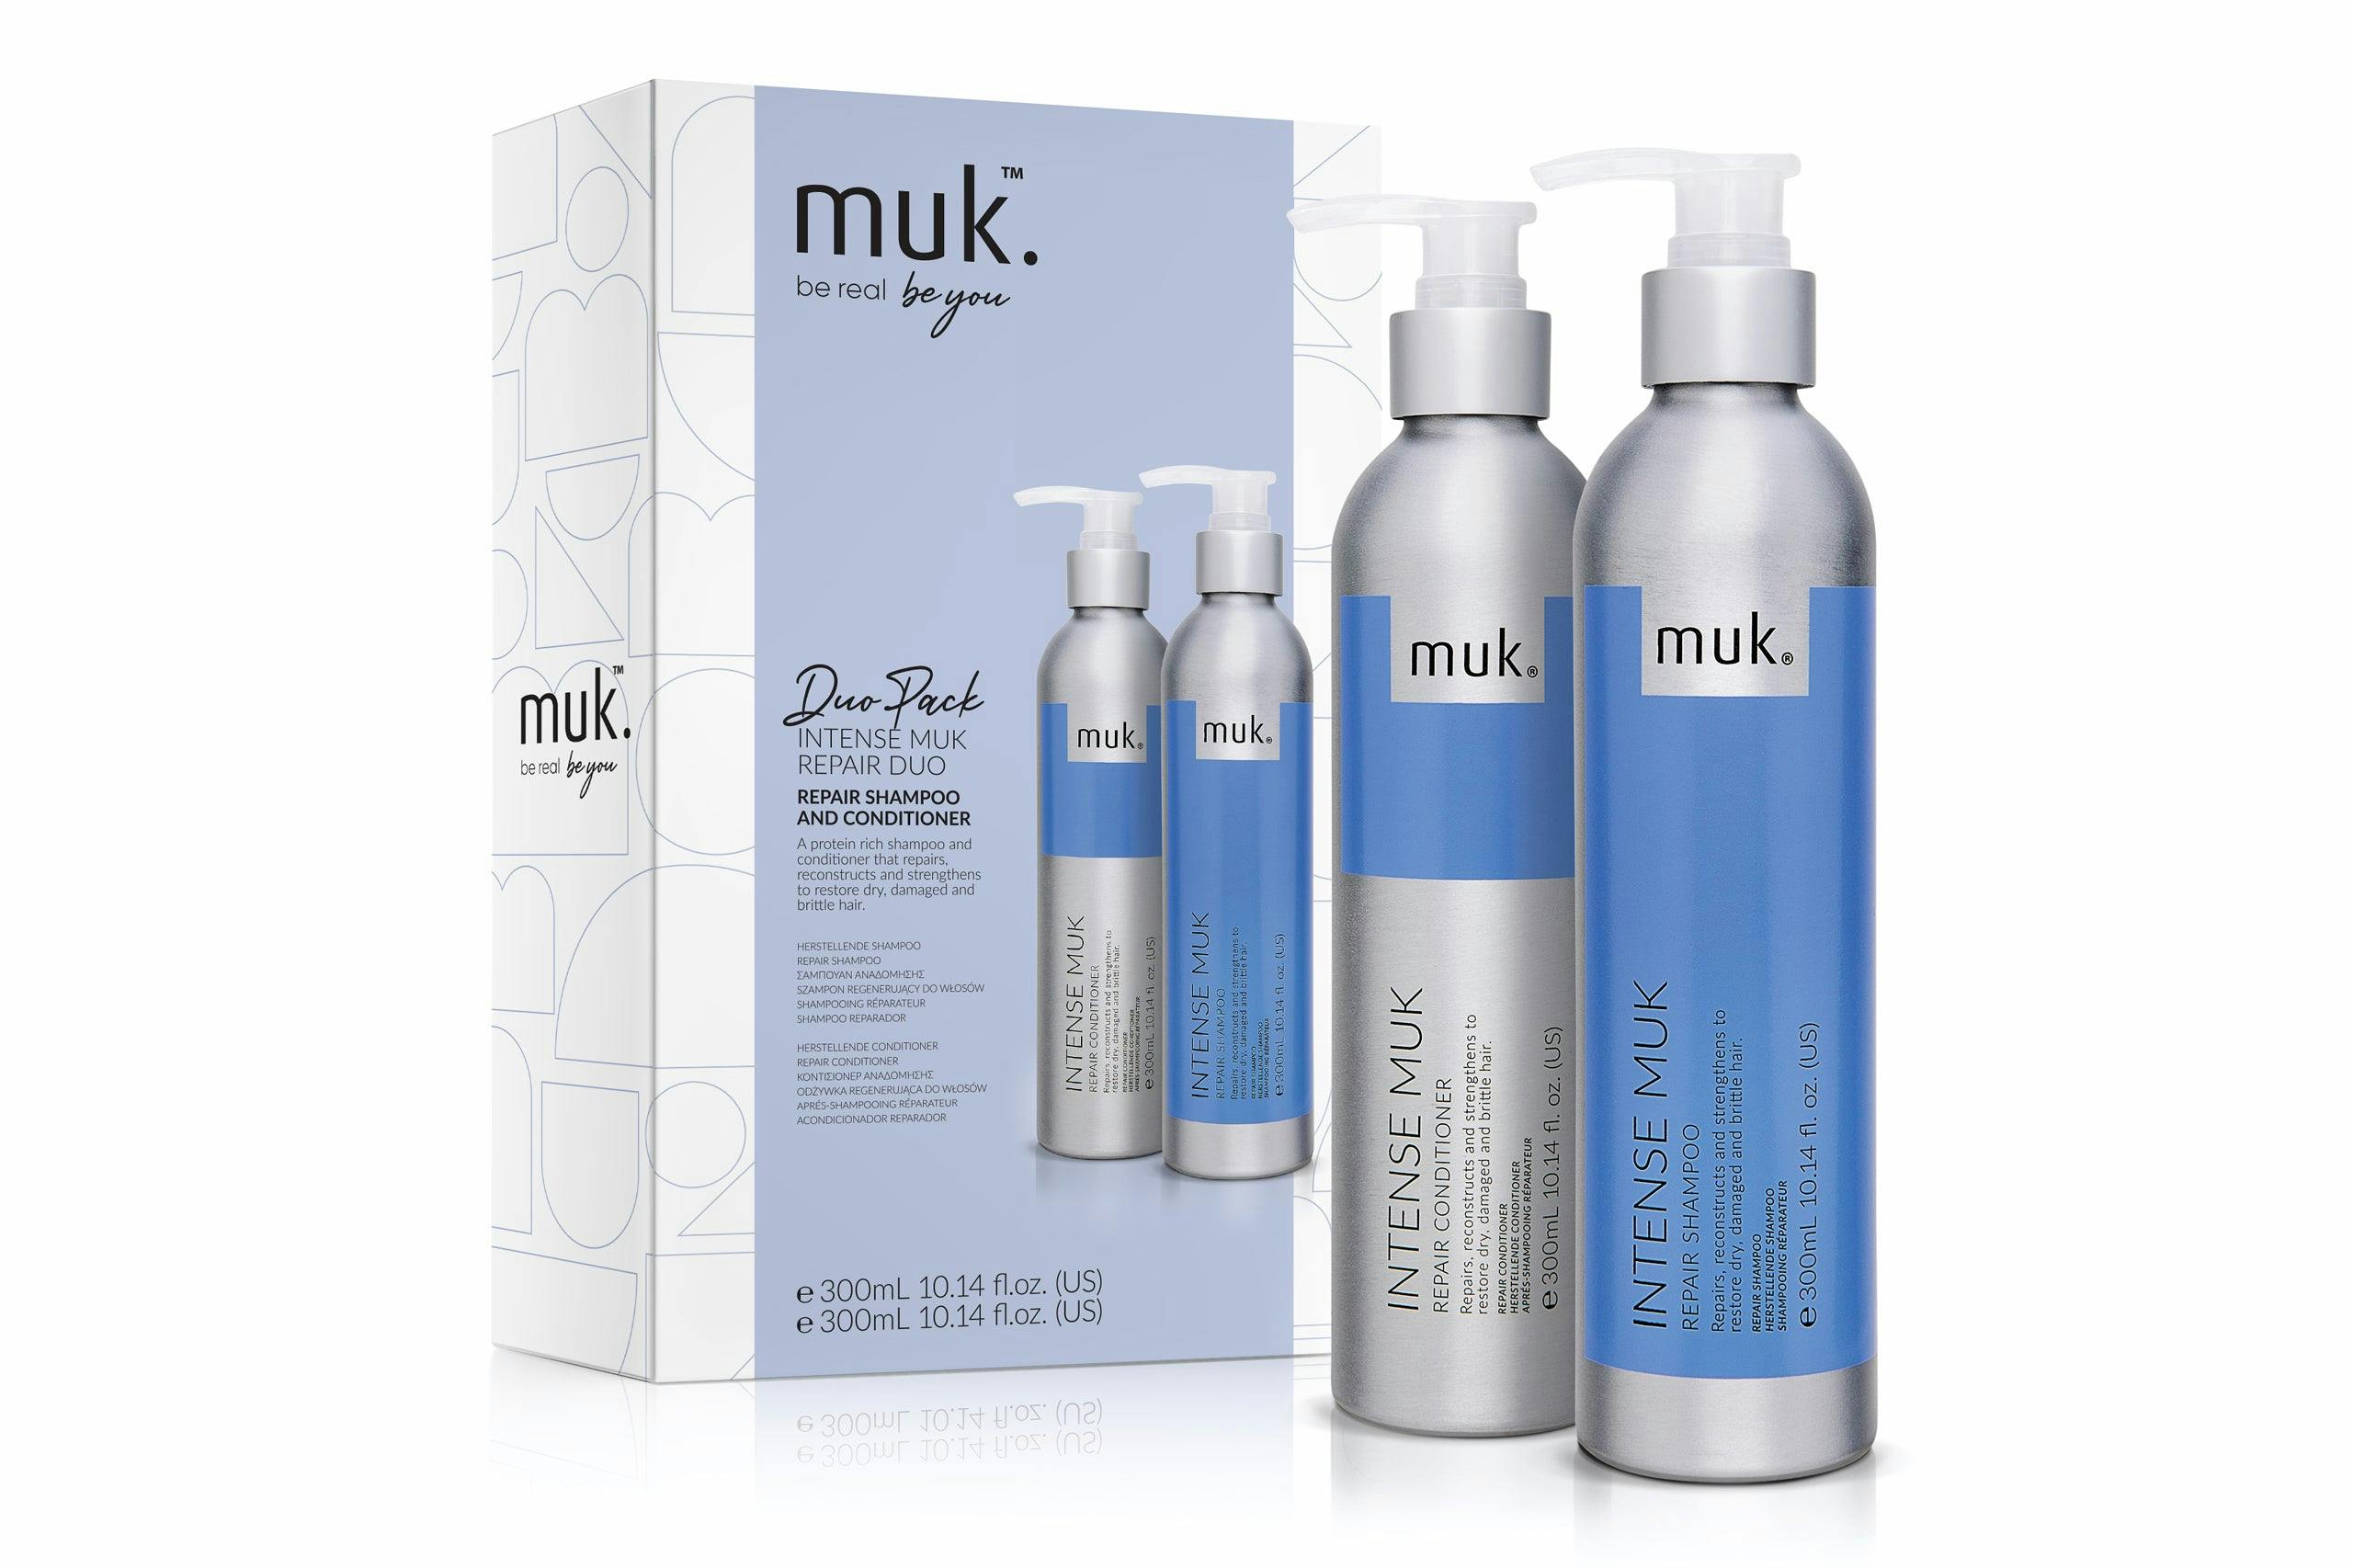 Muk Intense Muk Repair Shampoo and Conditioner 300ml Duo Pack